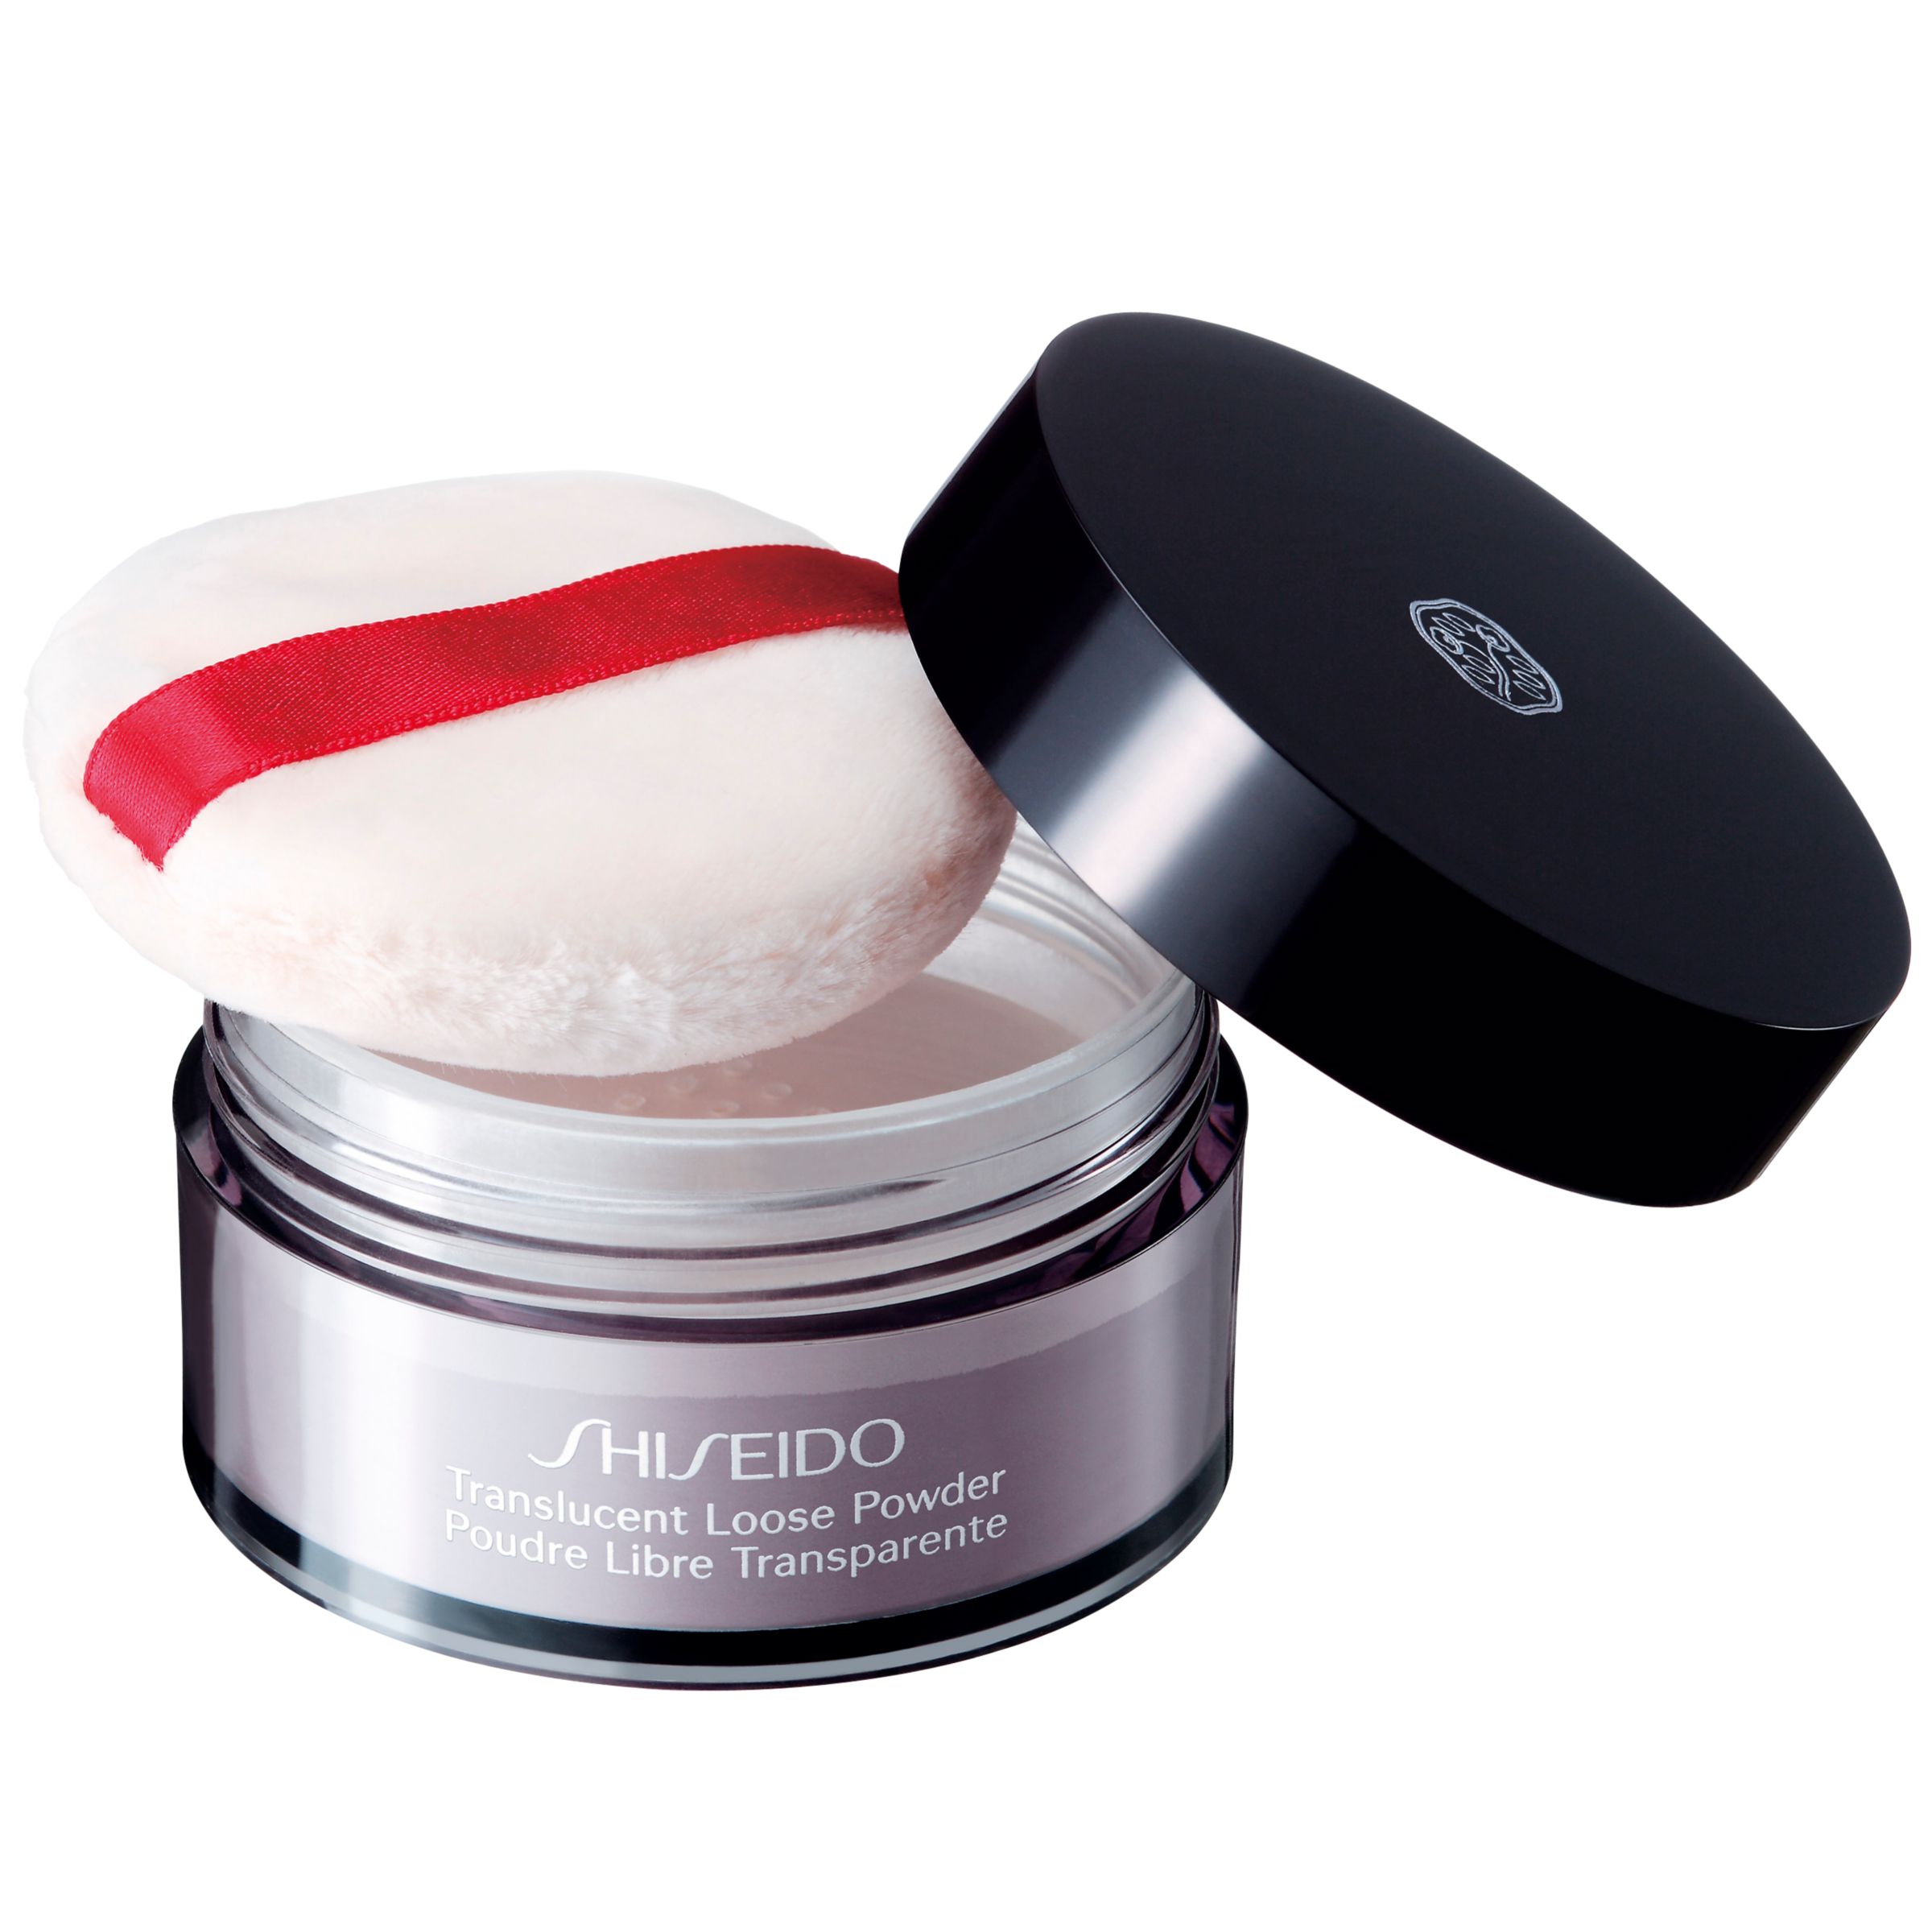 Shiseido Translucent Loose Powder 130922